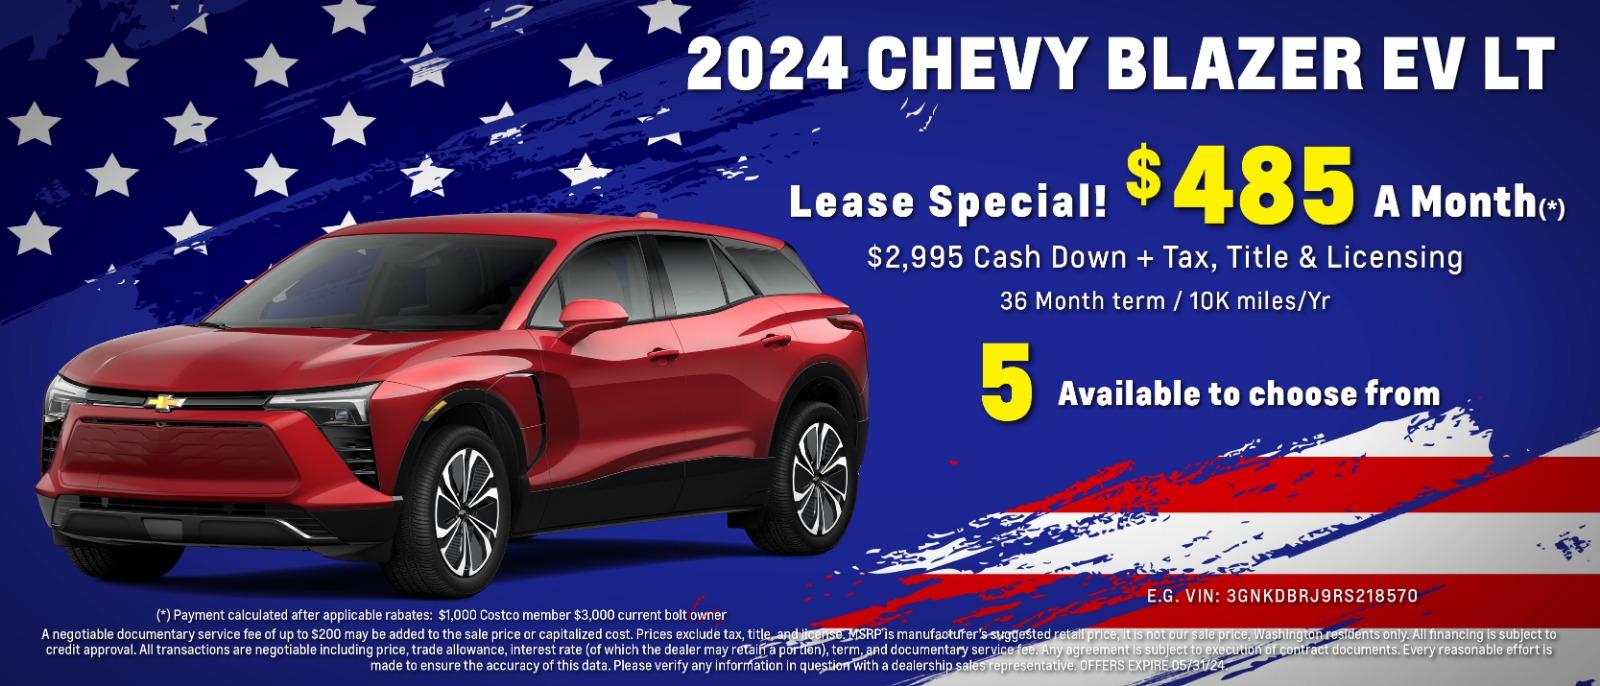 2024 Chevy Blazer EV LT